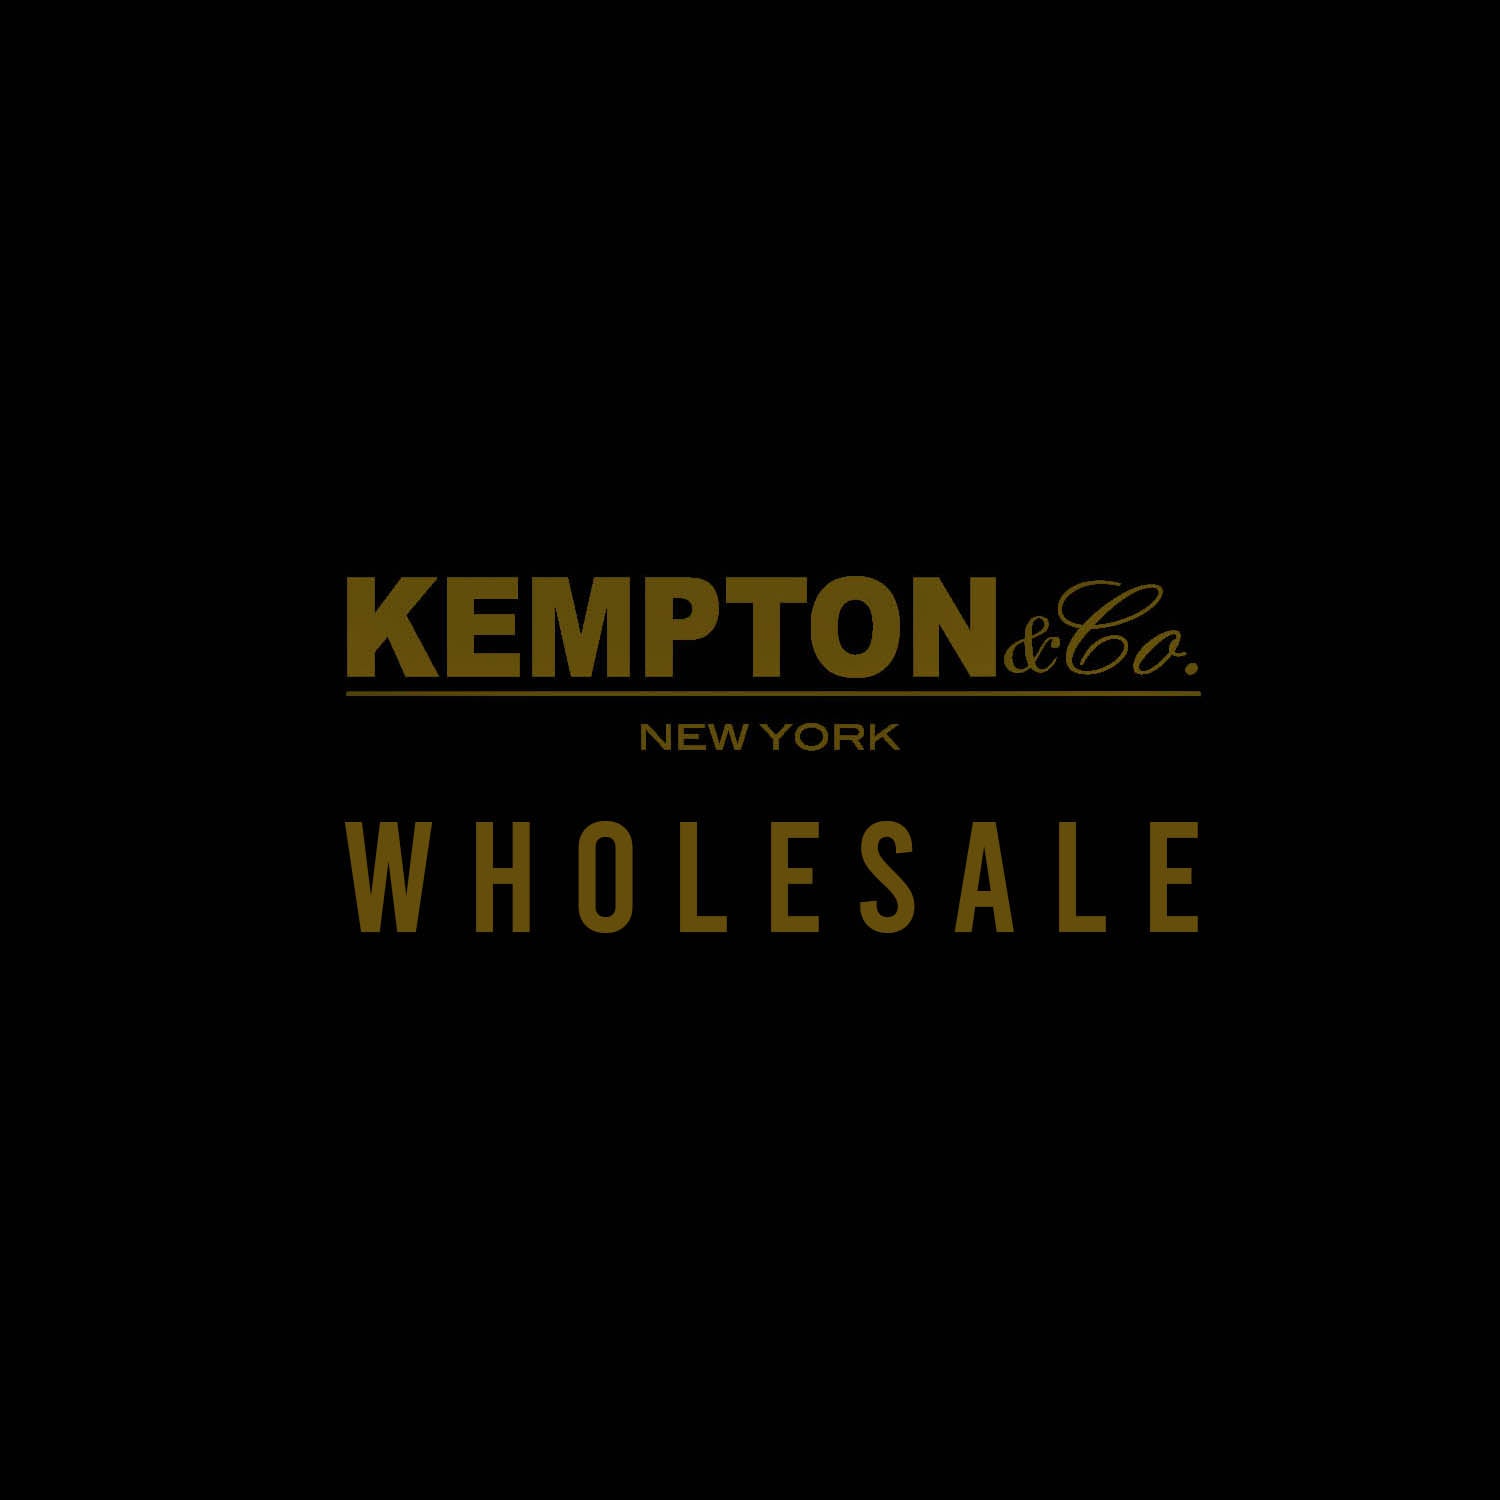 KEMPTON & CO. WHOLESALE